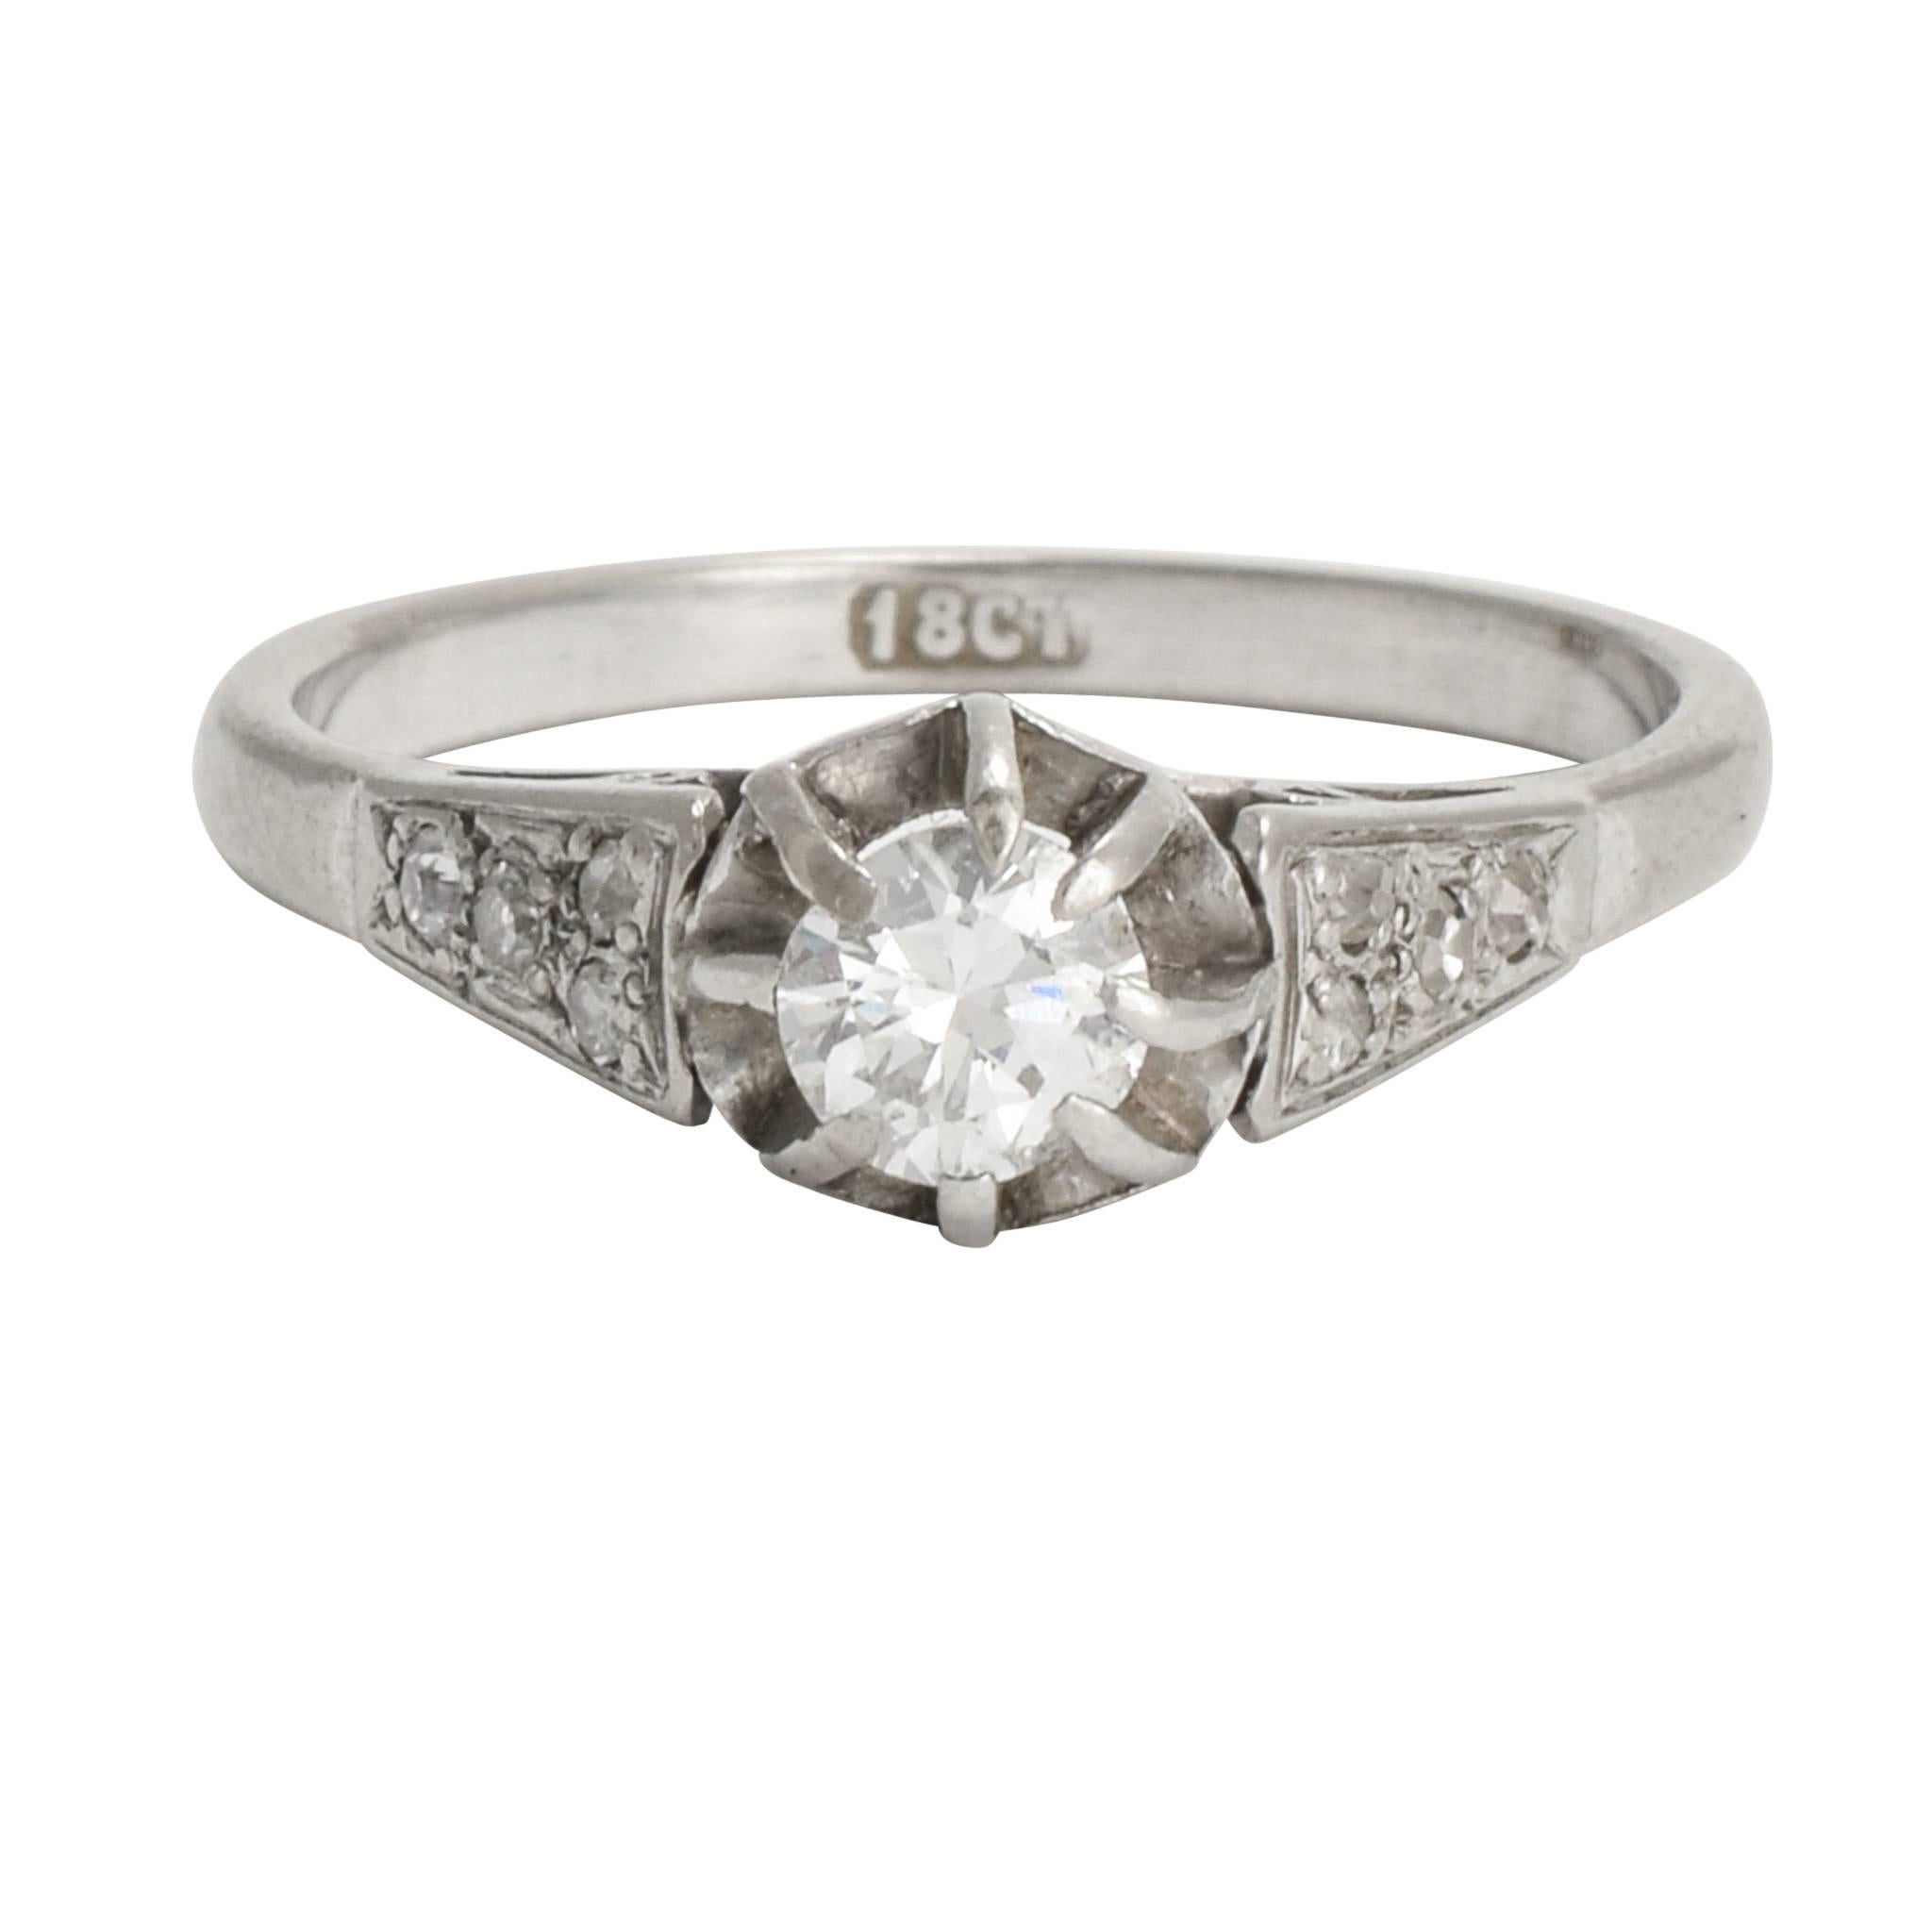 1930s Art Deco Diamond Engagement Ring